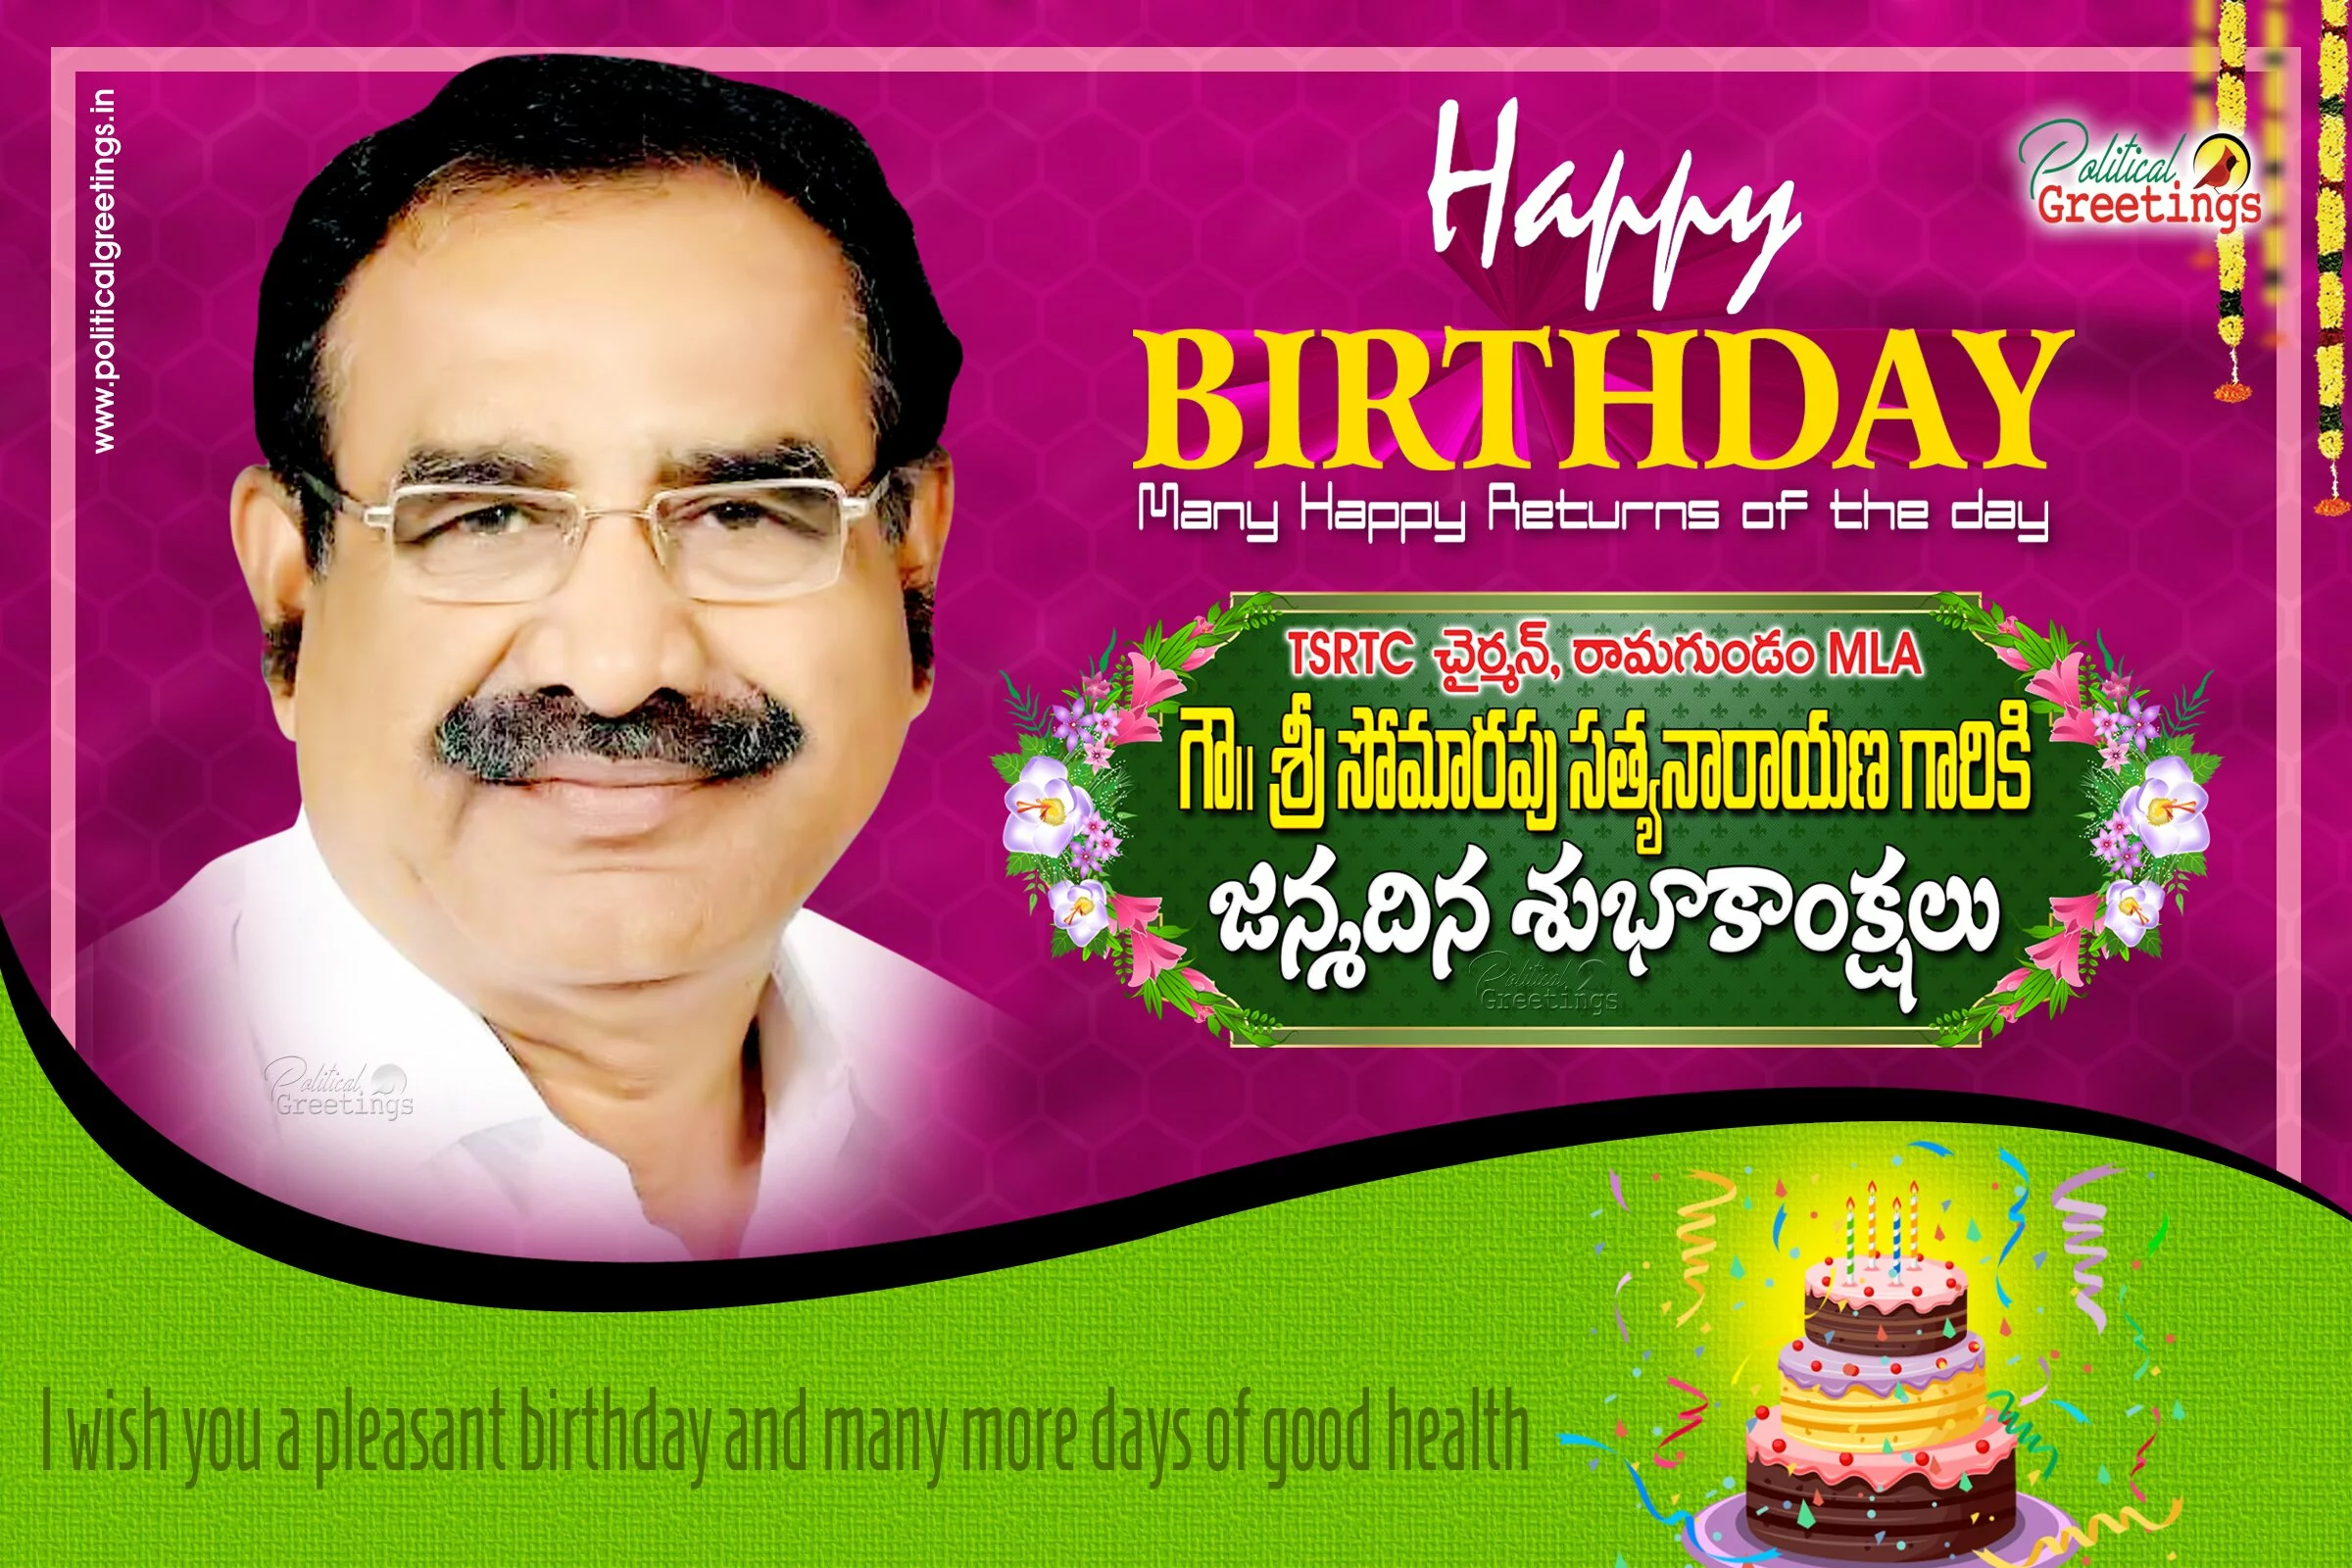 tsrtc-chairman-somarapu-satyanarayana-birthday-wishes-poster-quotes-wallpapers3